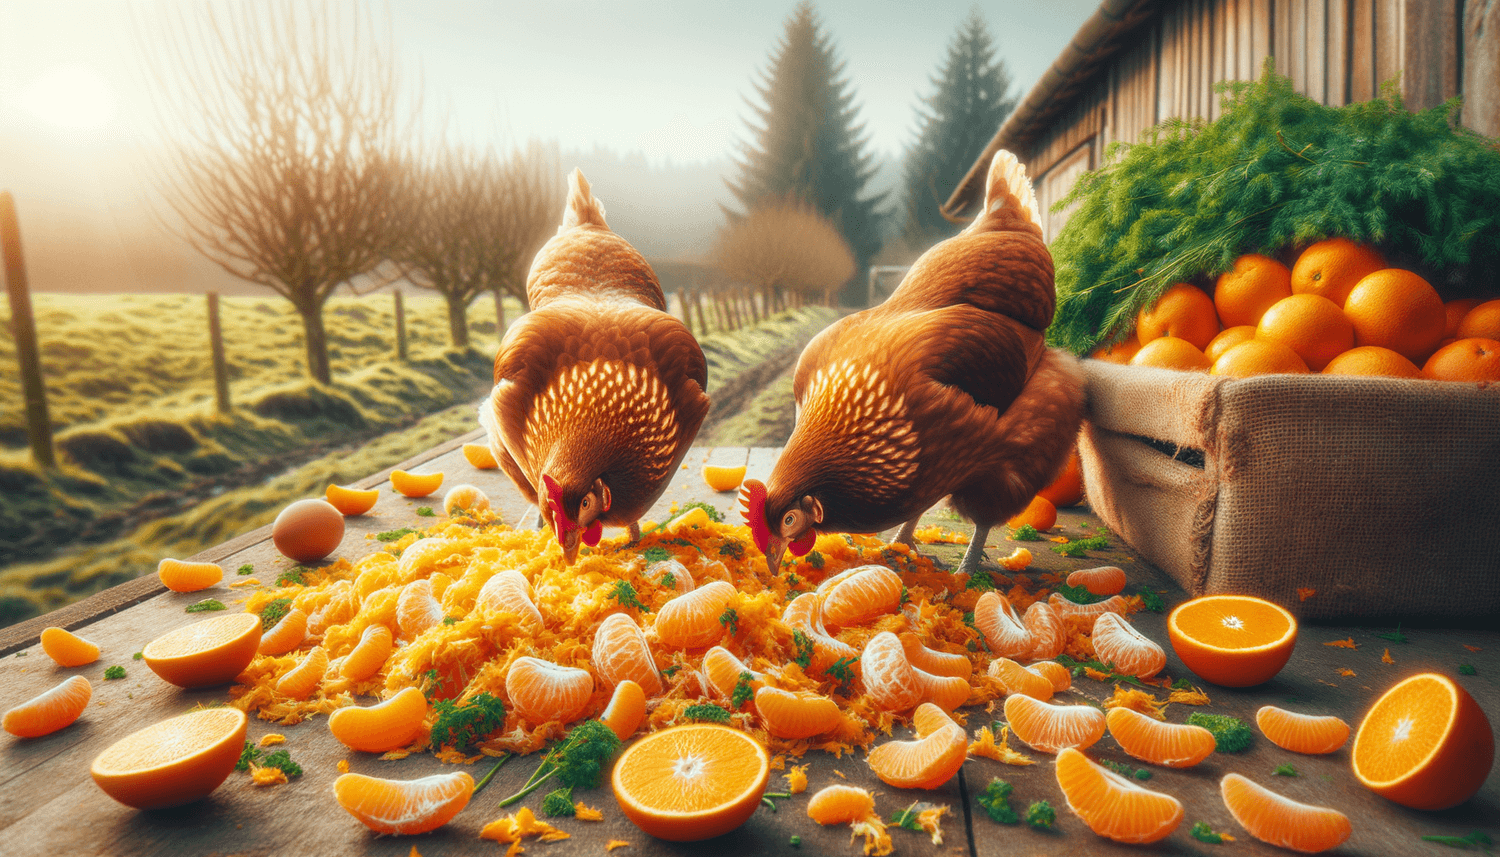 Can Chickens Eat Orange Pulp?